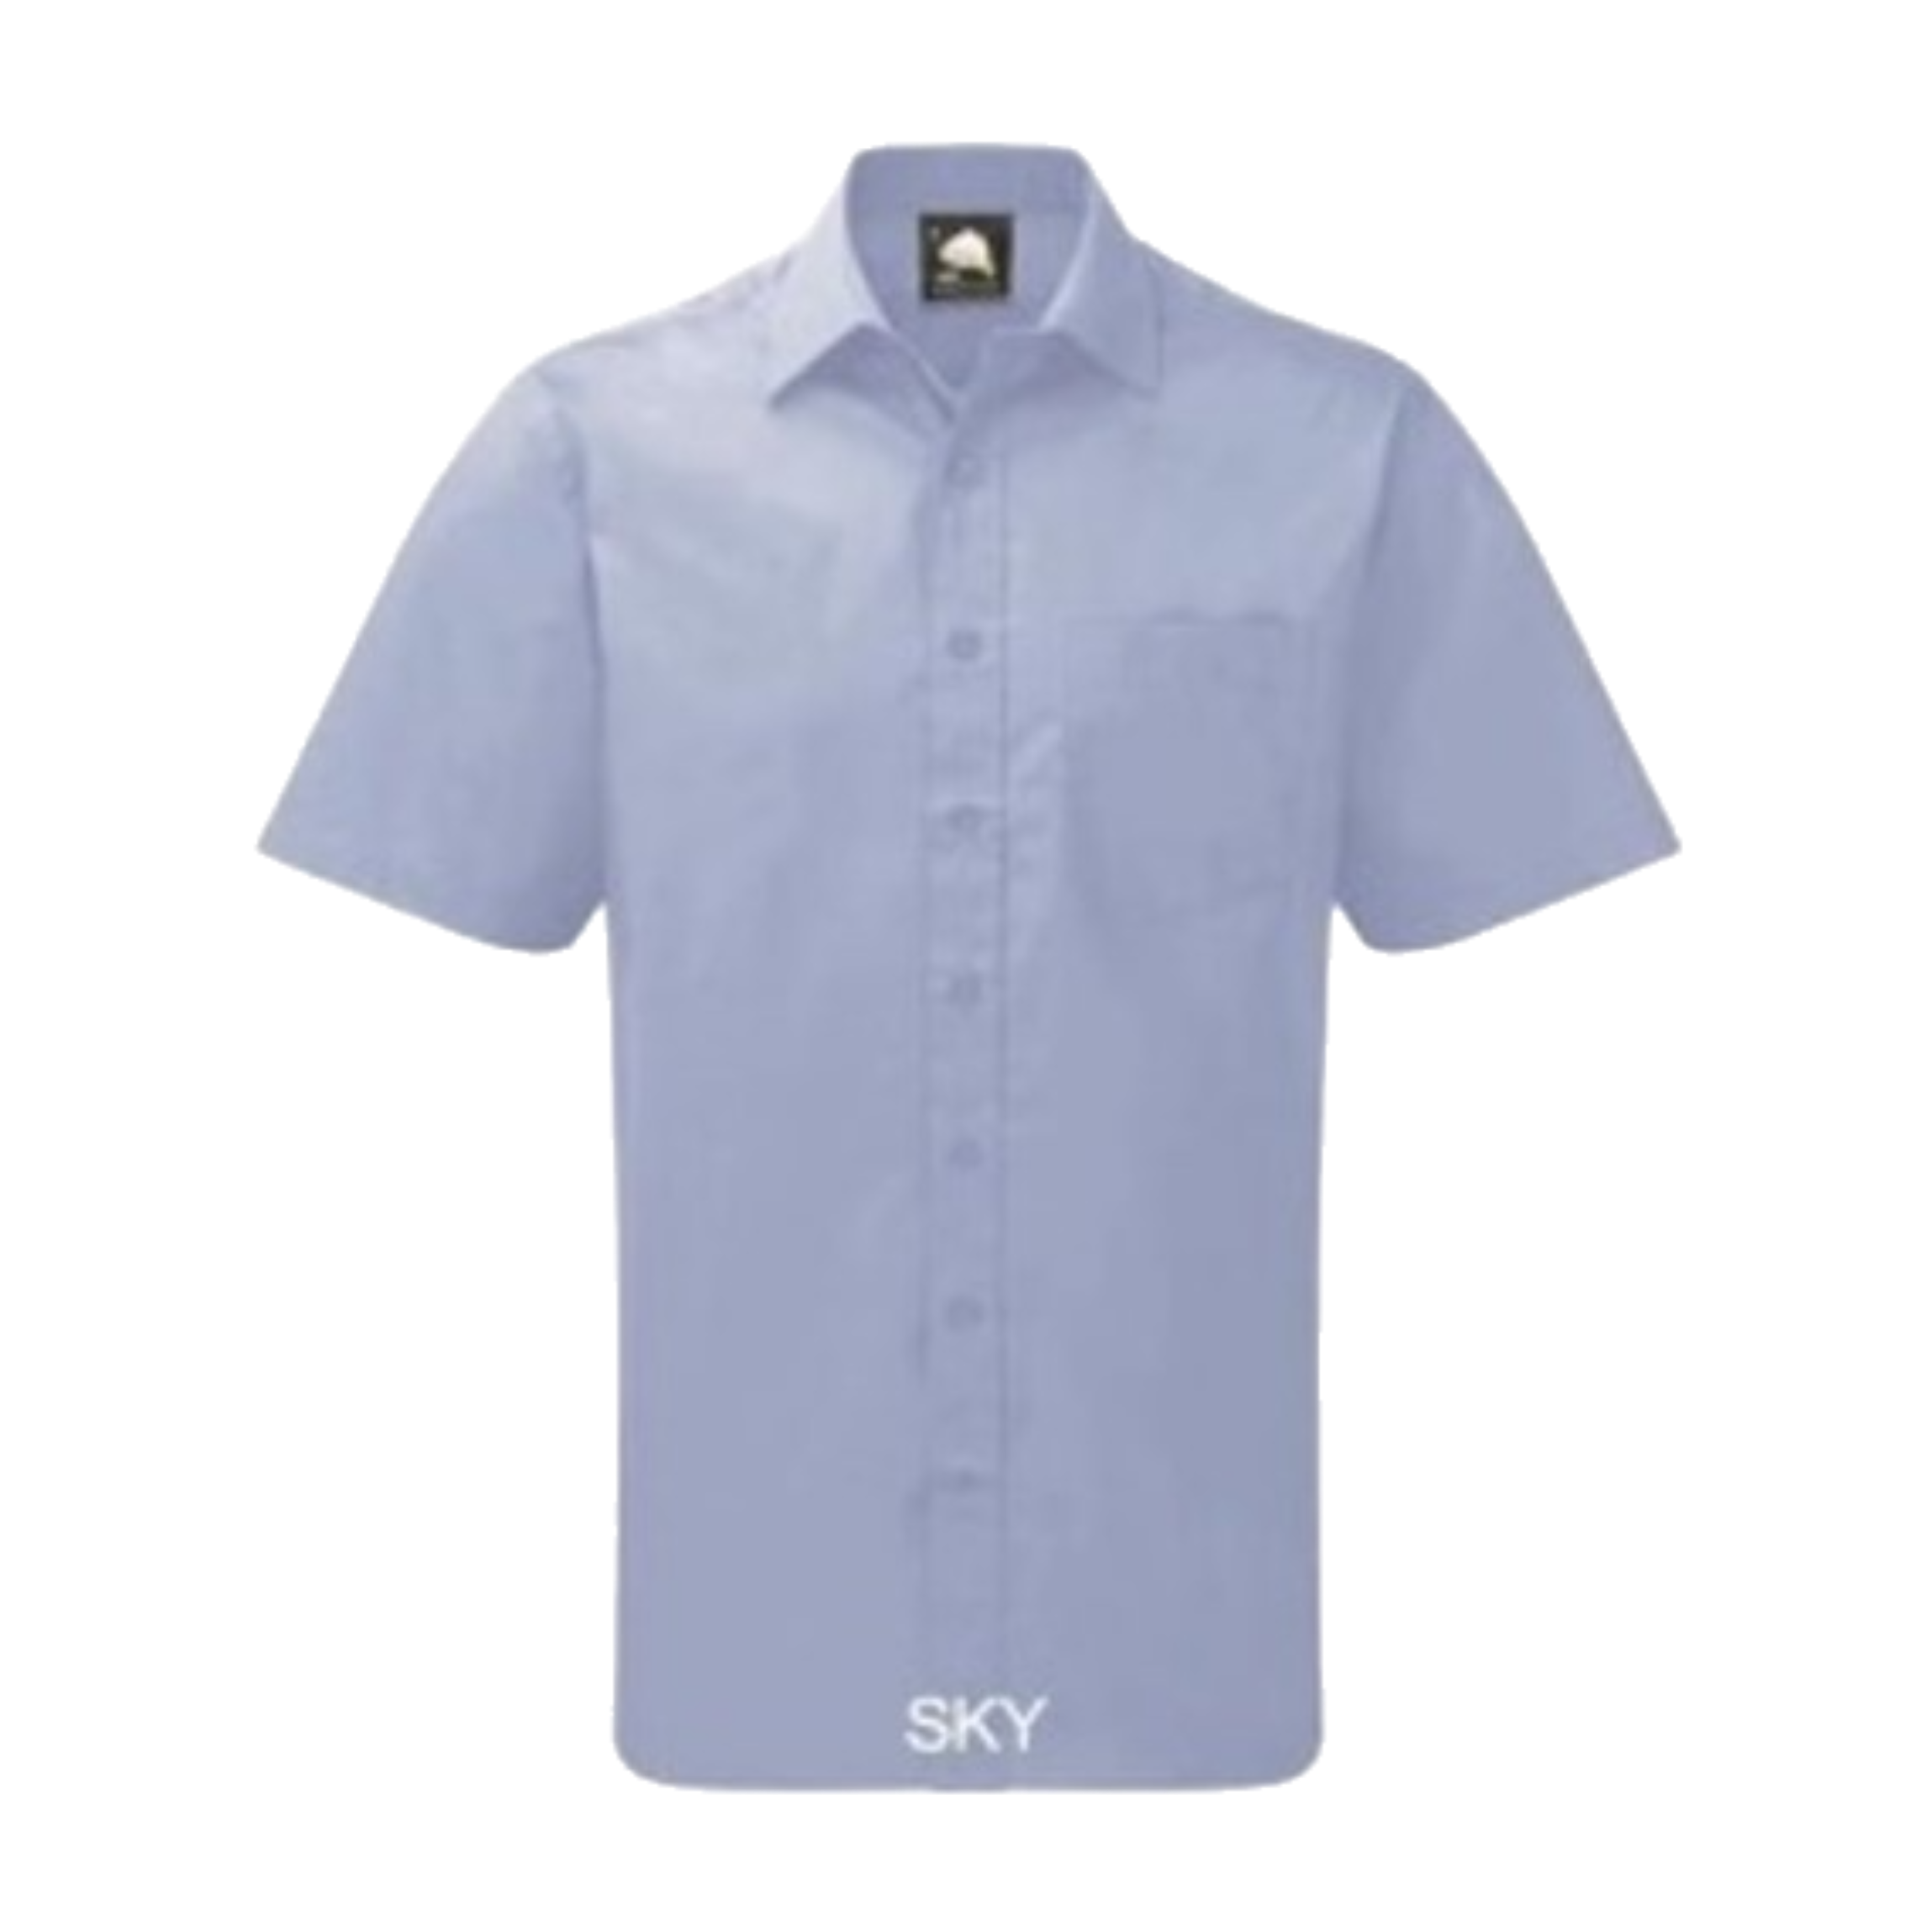 Orn Premium Oxford Short Sleeve Shirt - Sky Blue - 15in - TJ Hughes